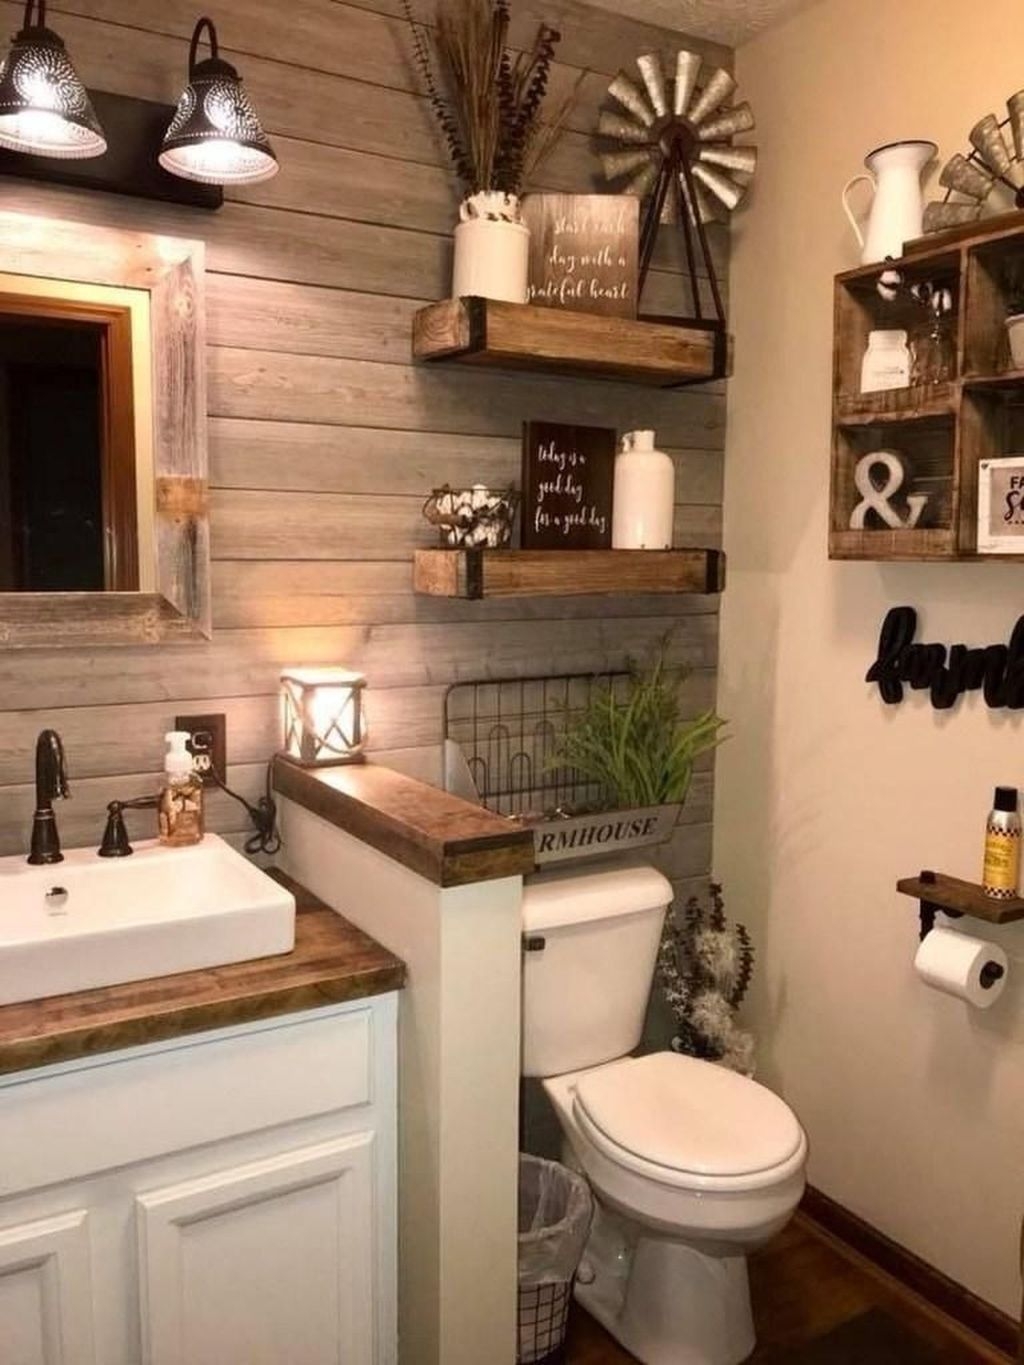 Cozy Small Bathroom Ideas With Wooden Decor 23 